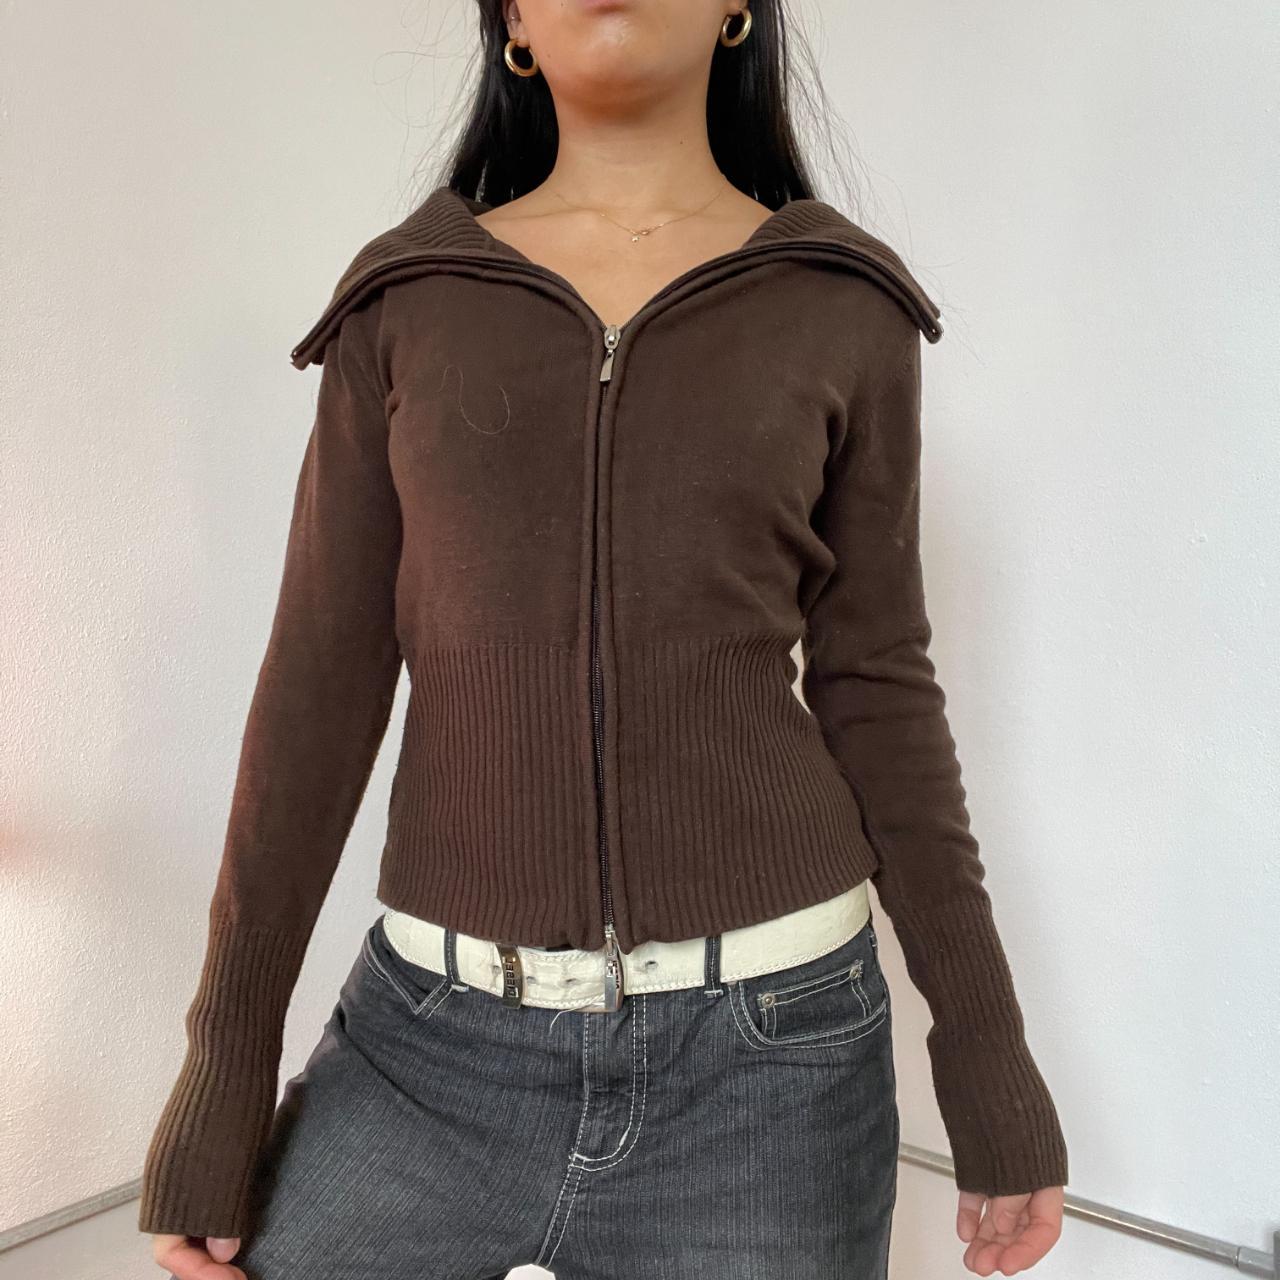 Vintage brown double zip up knit jumper, worn on... - Depop